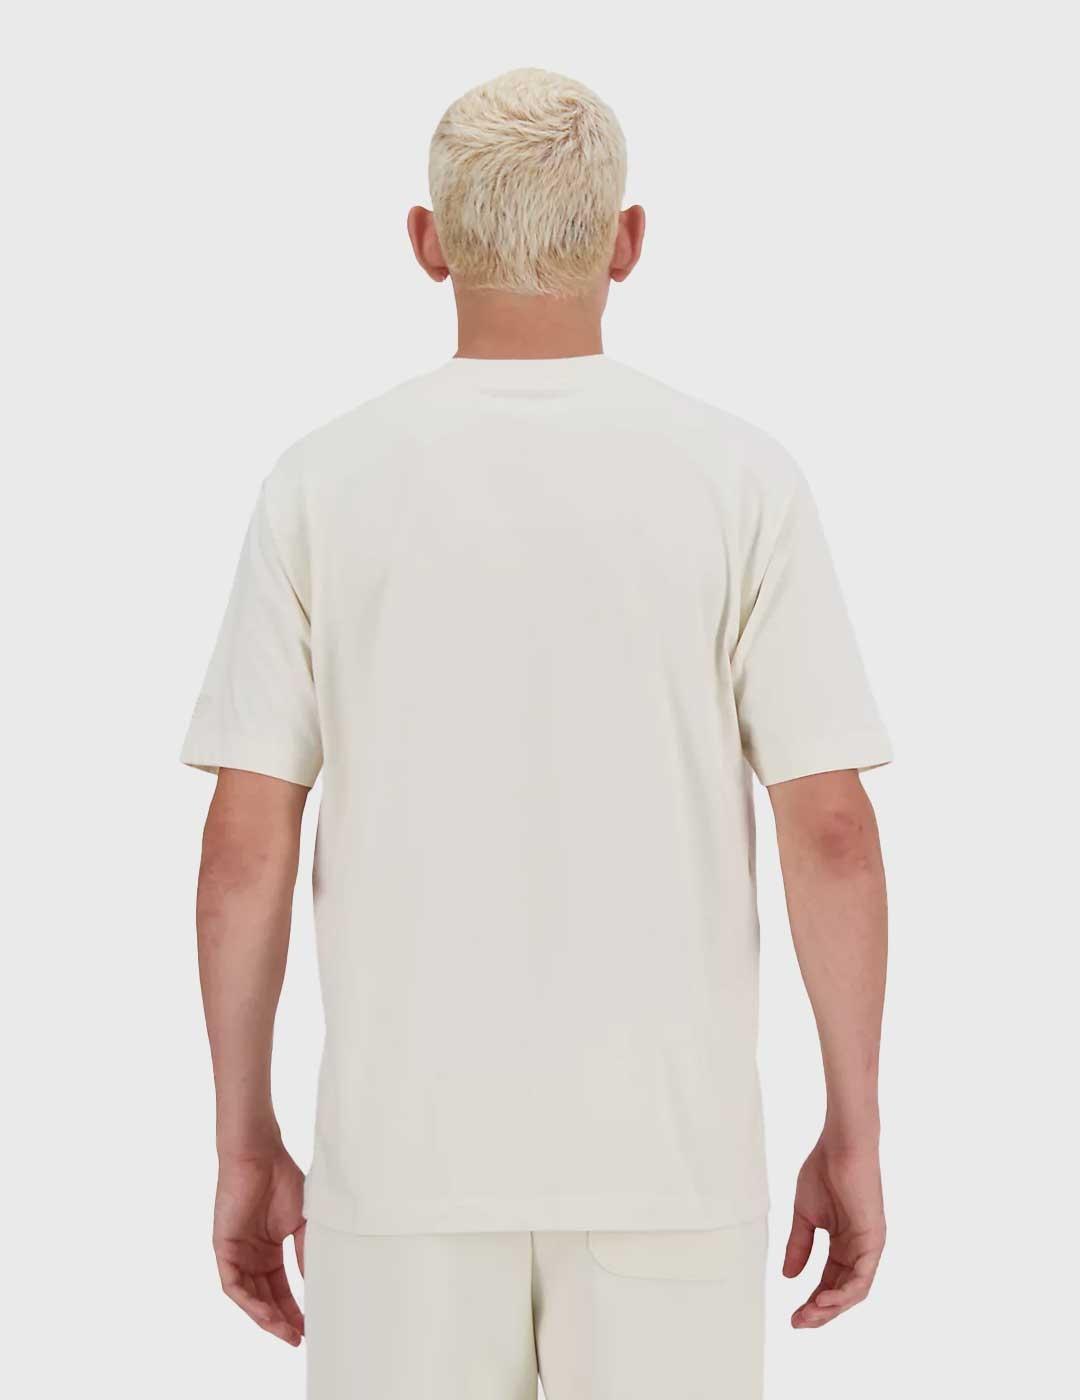 New Balance Hyper Density Graphic Camiseta beige para hombre